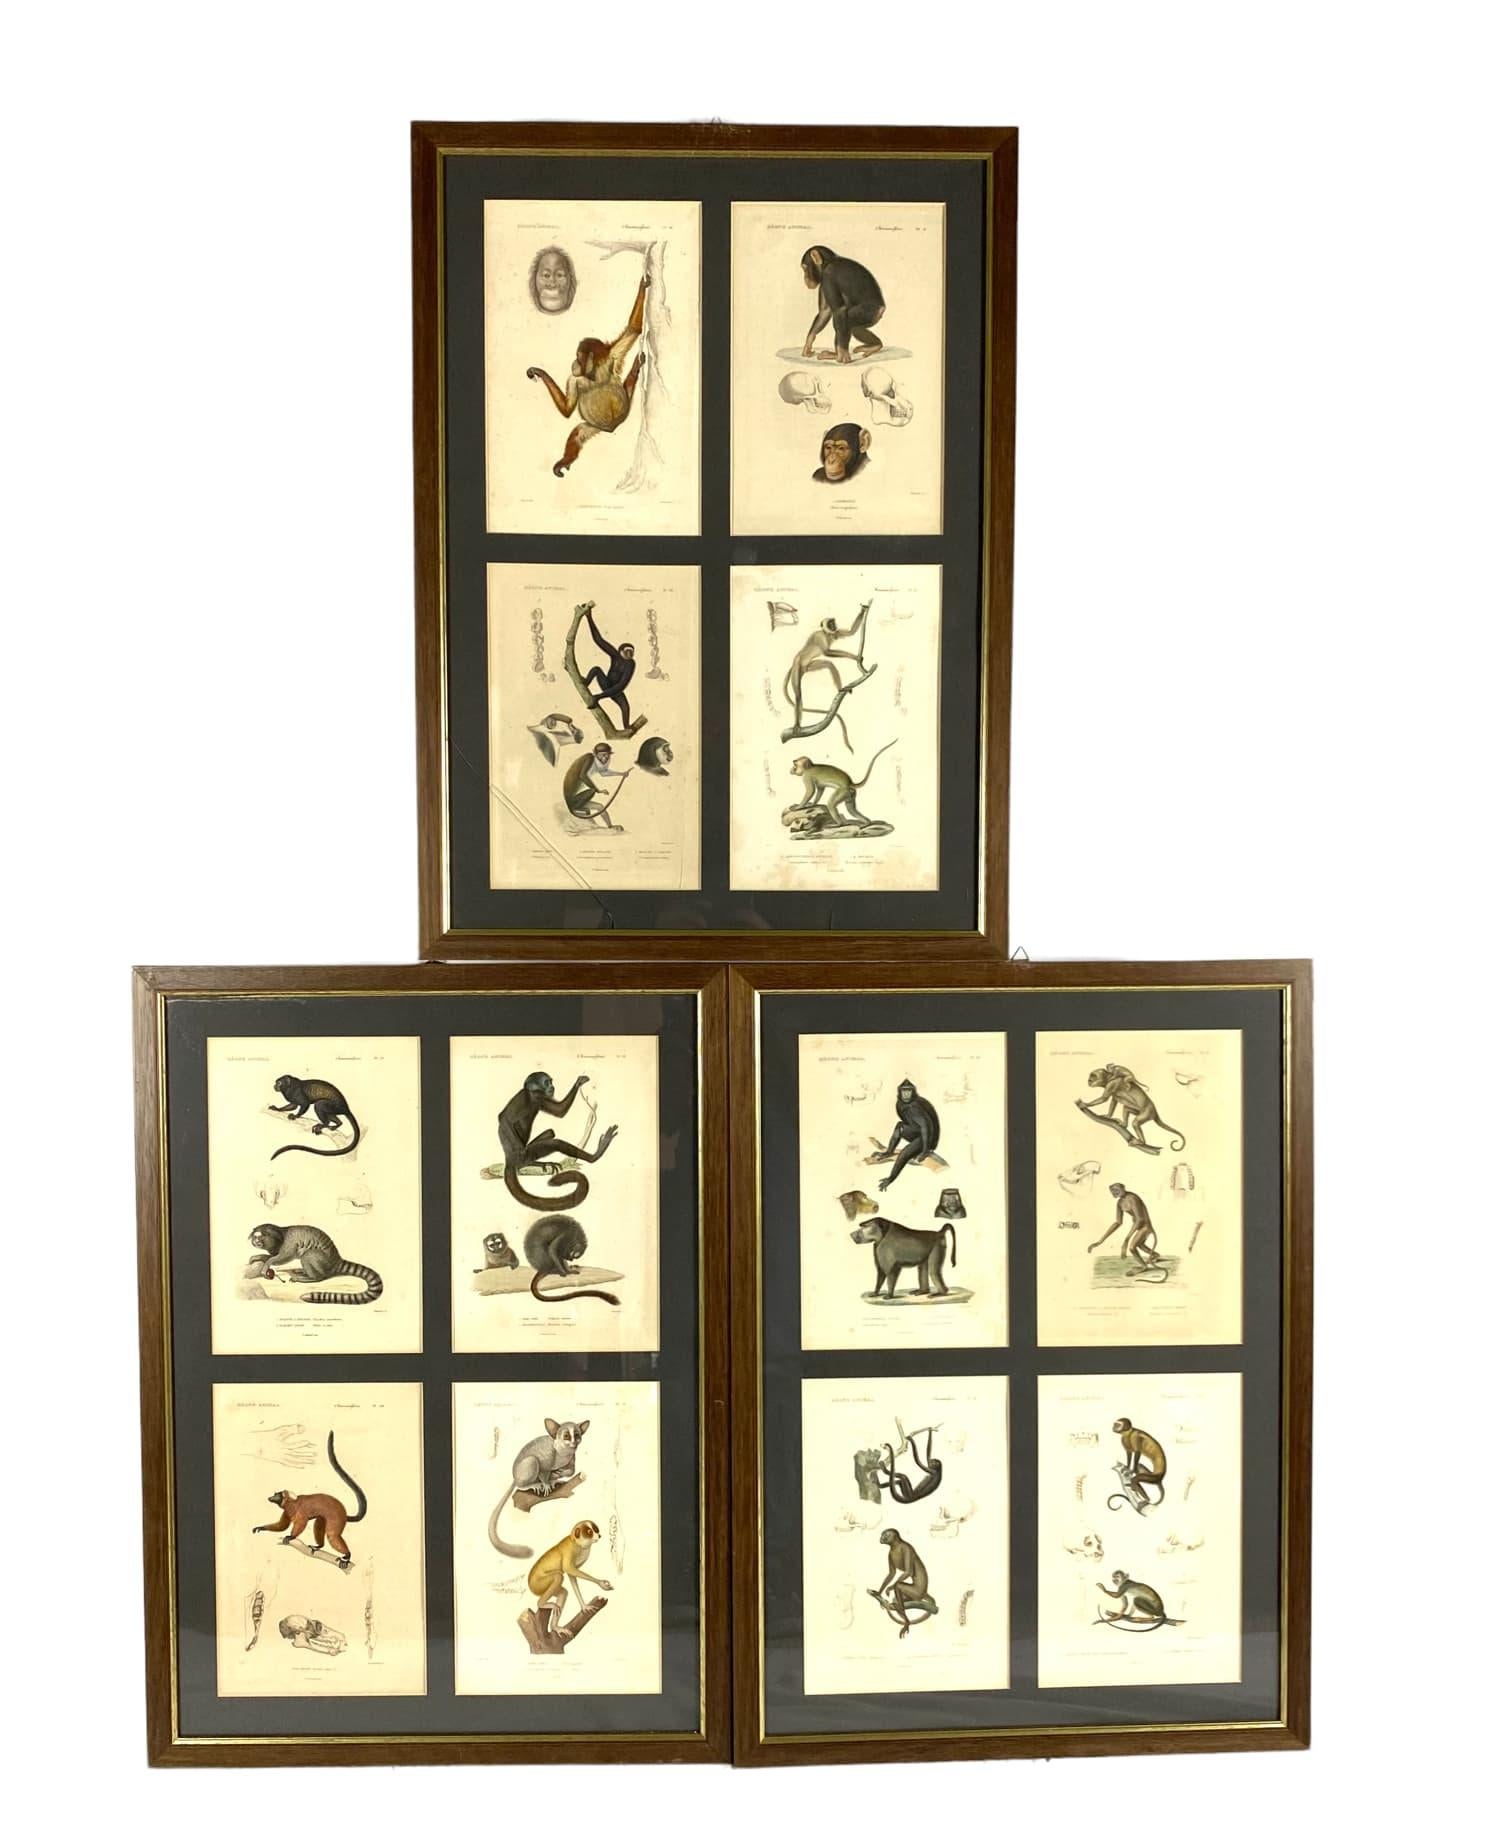 British Colonial Monkeys Prints, 12 Engravings from 